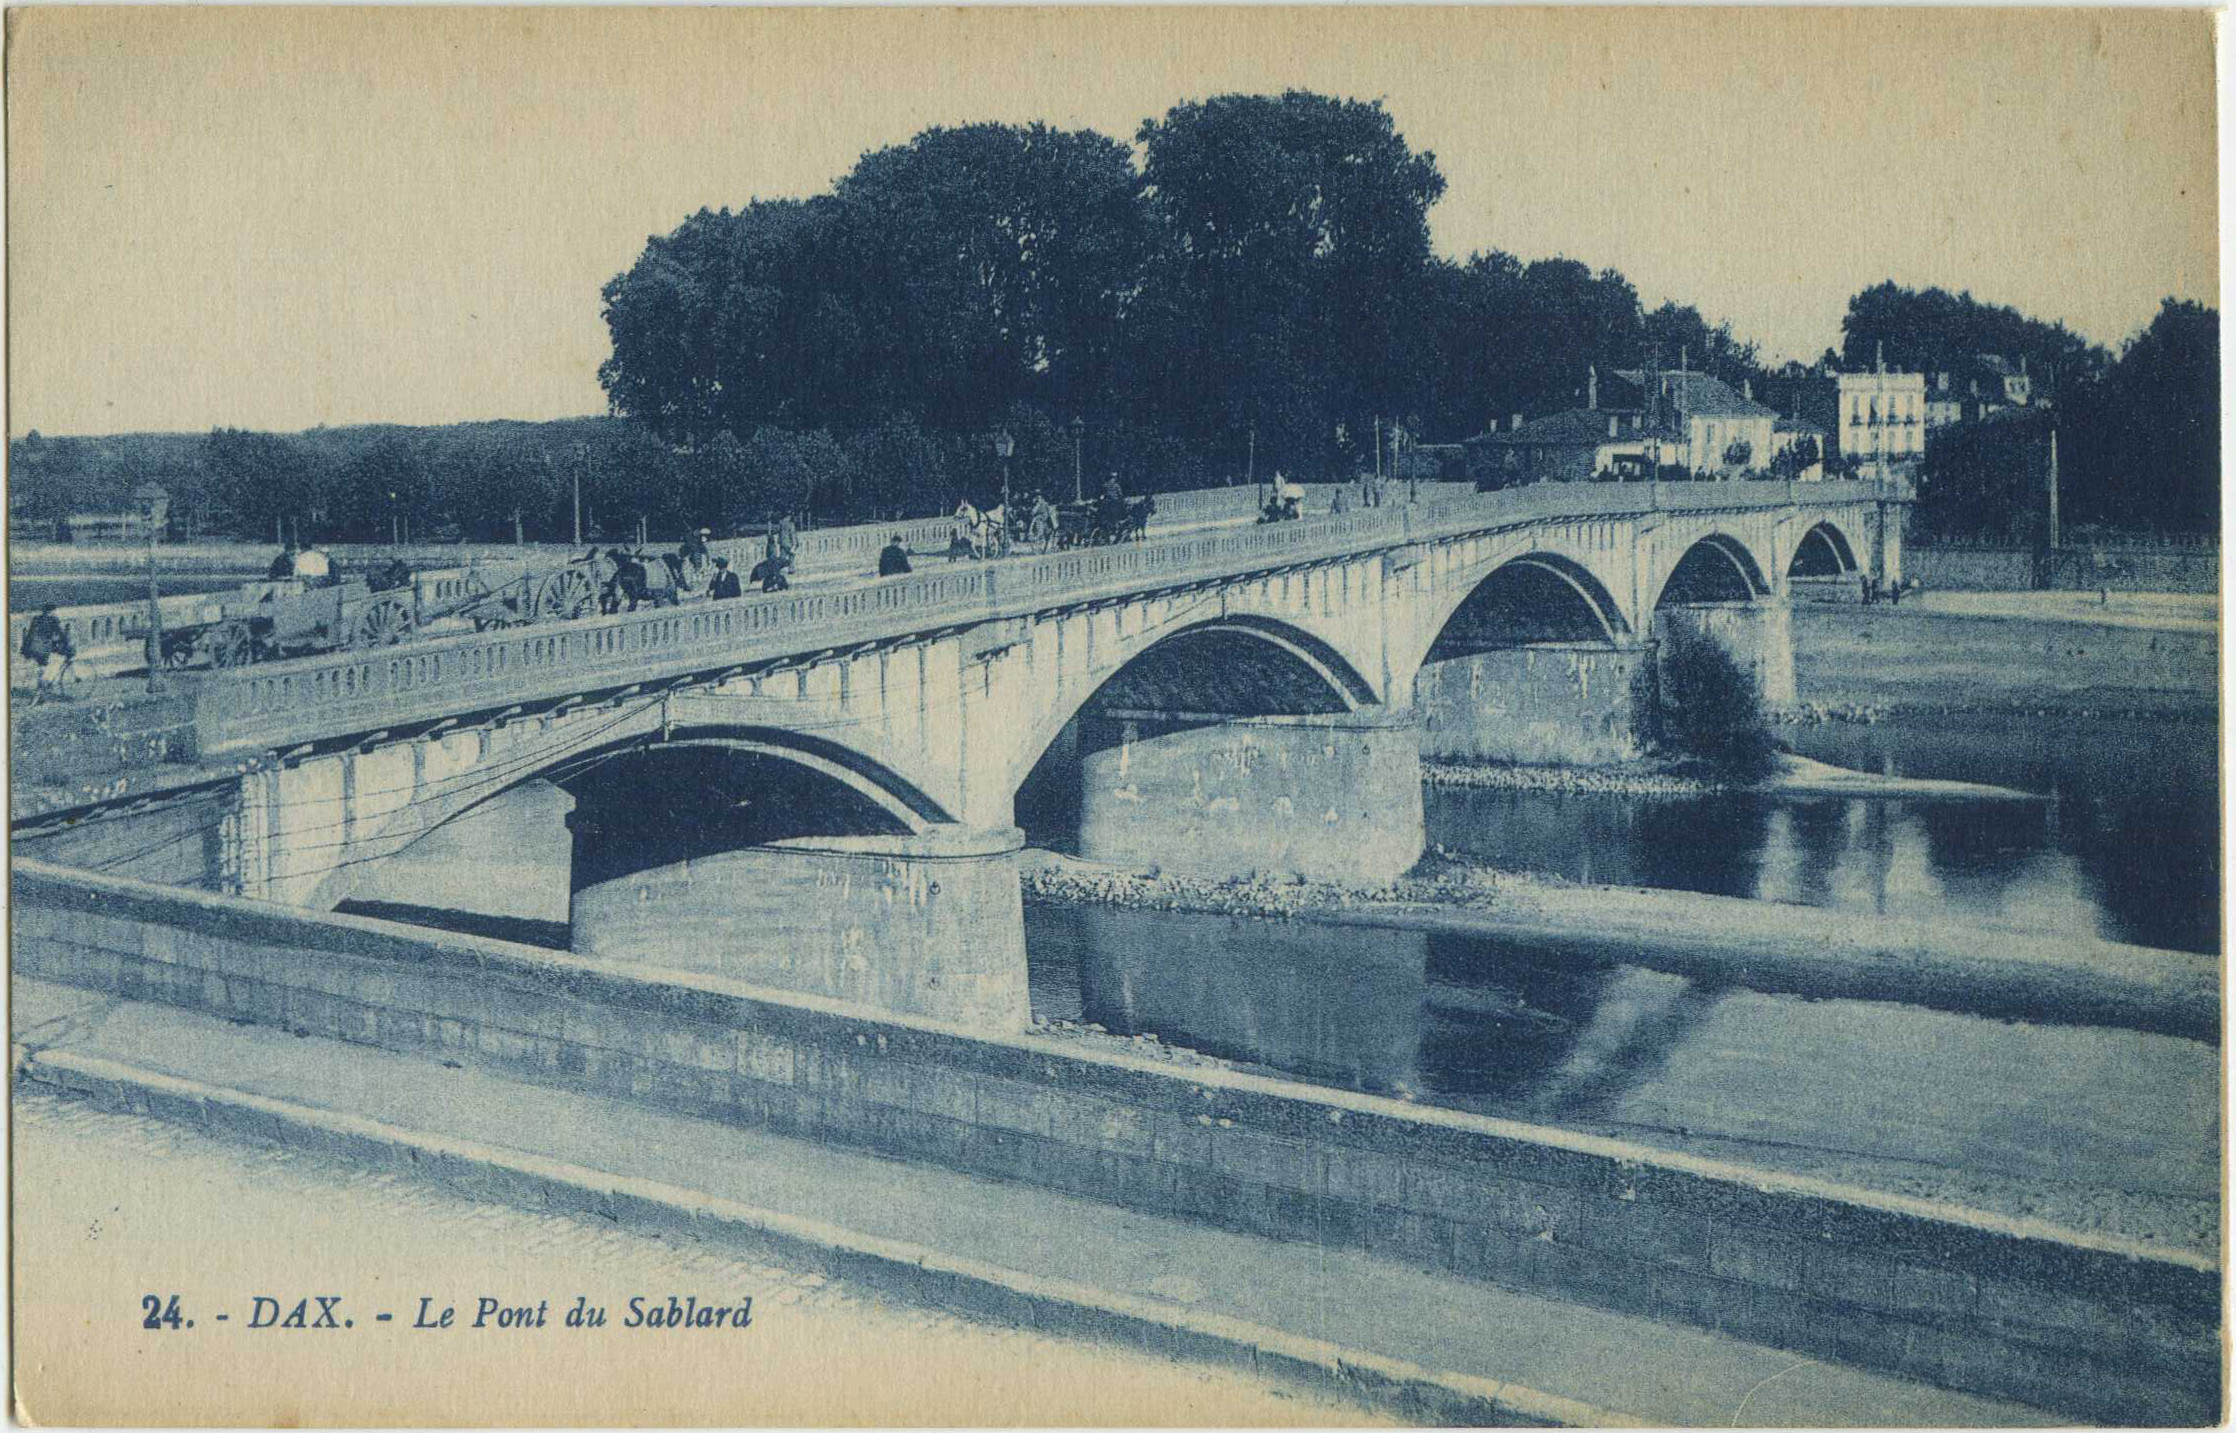 Dax - Le Pont du Sablard